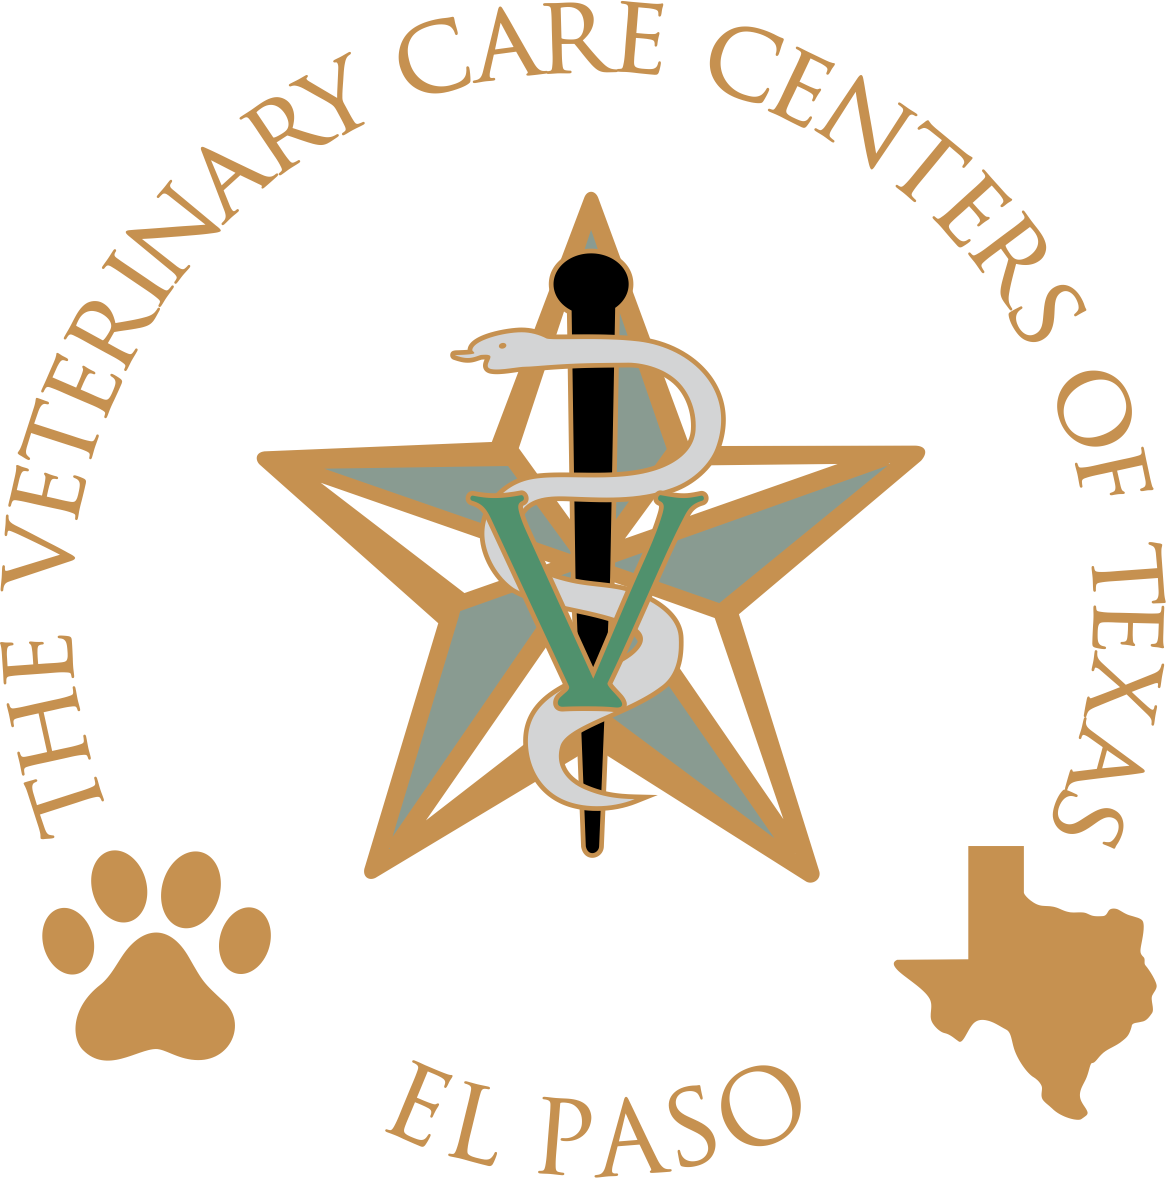 The Veterinary Care Centers of Texas- El Paso